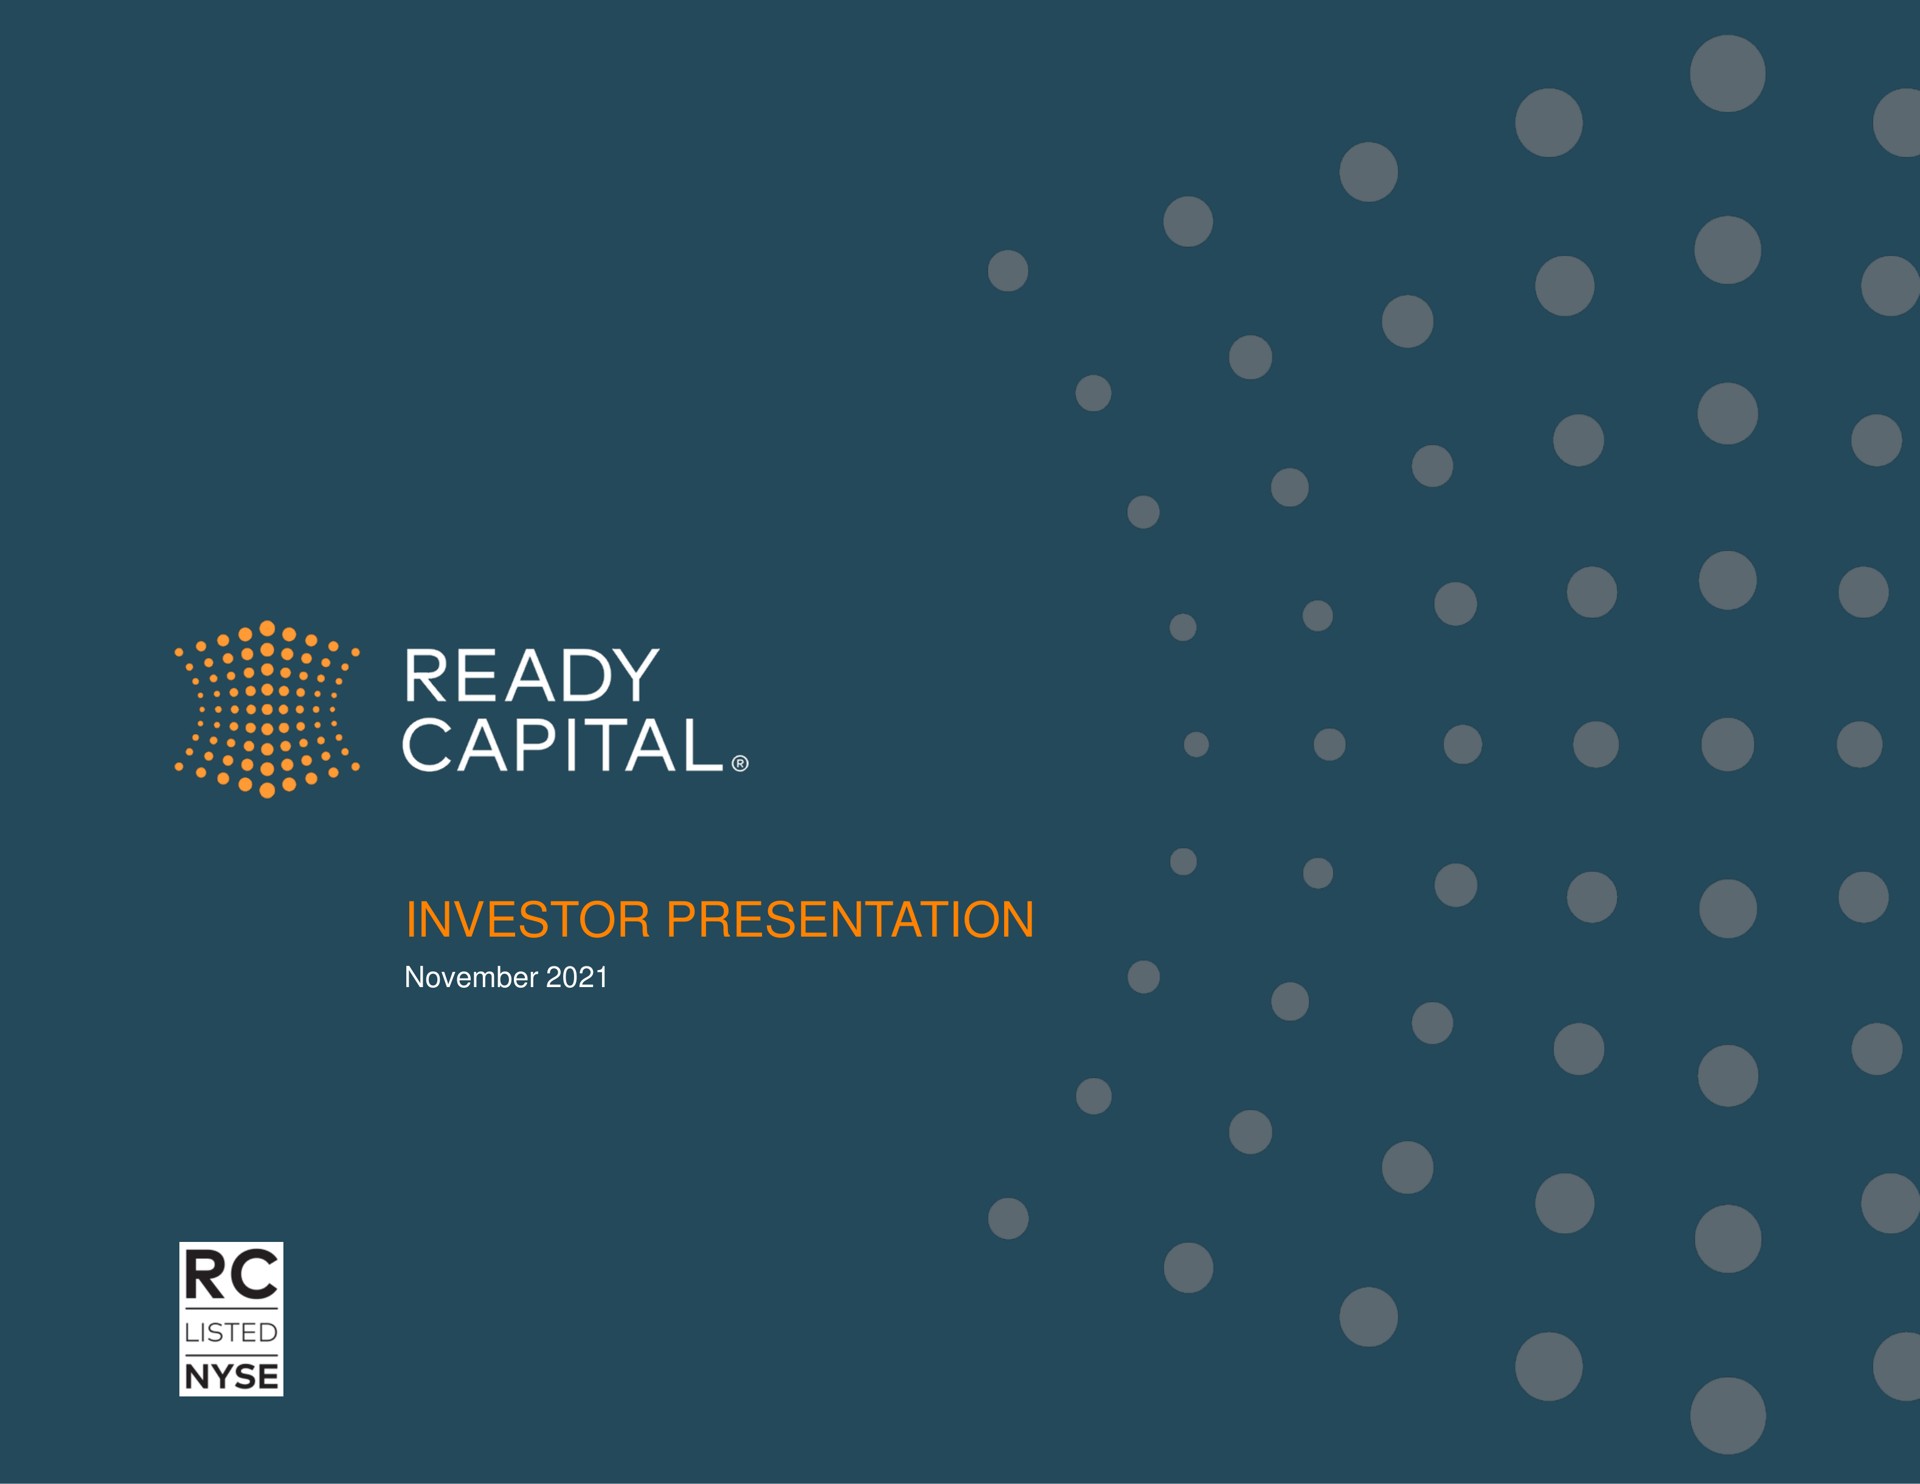 capital investor presentation | Ready Capital